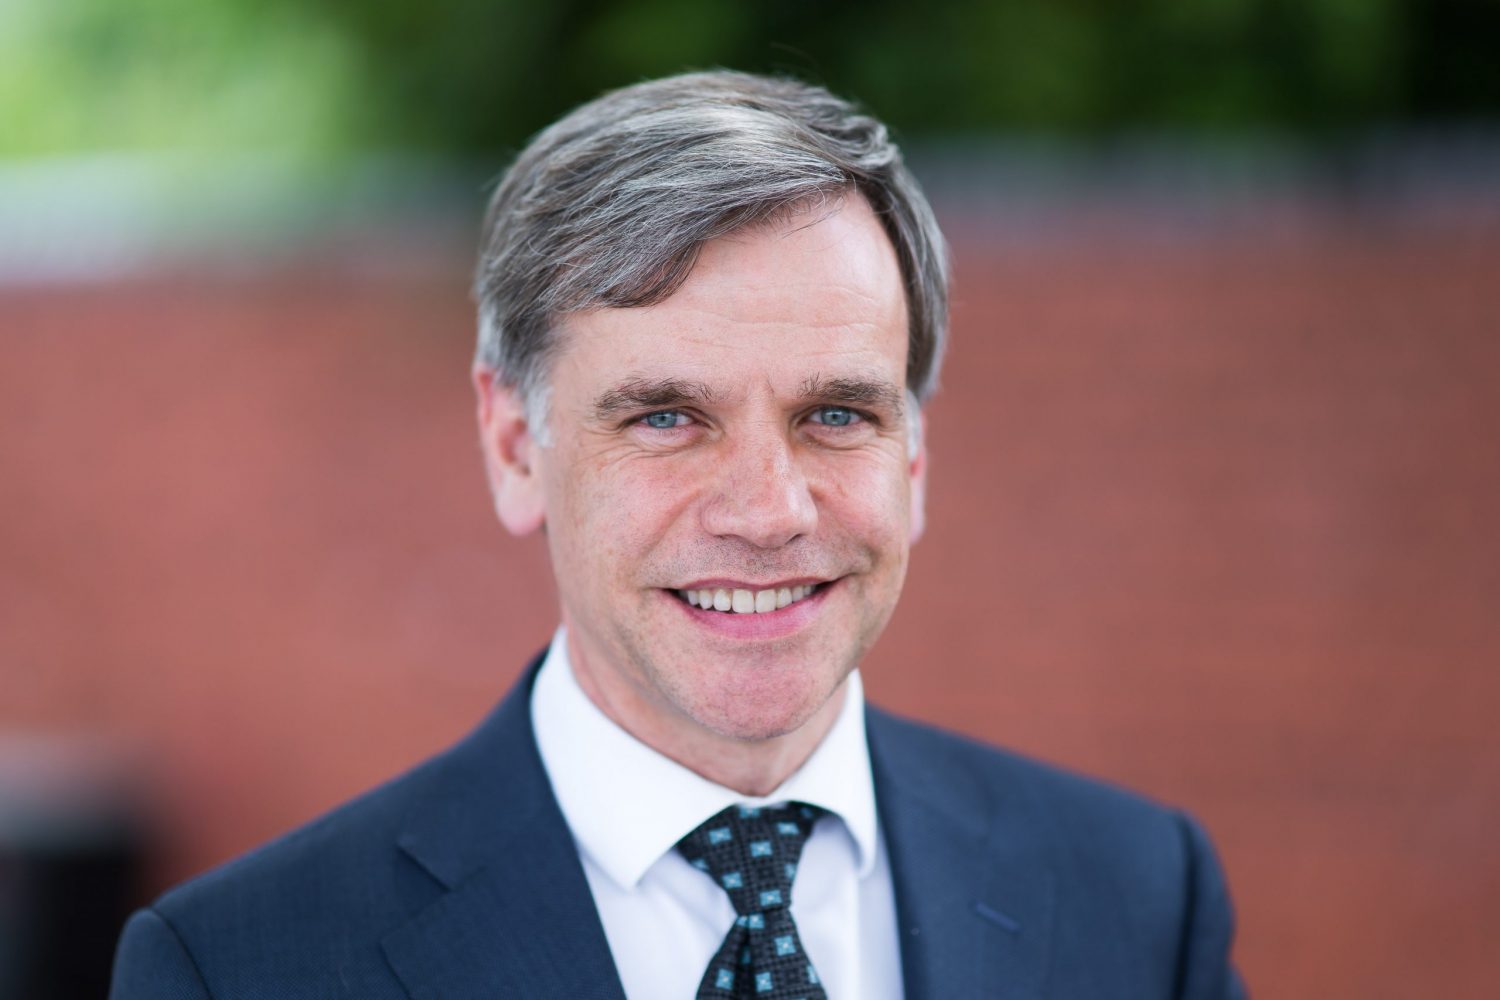 Headshot of Keith Morgan, CEO of the British Business Bank